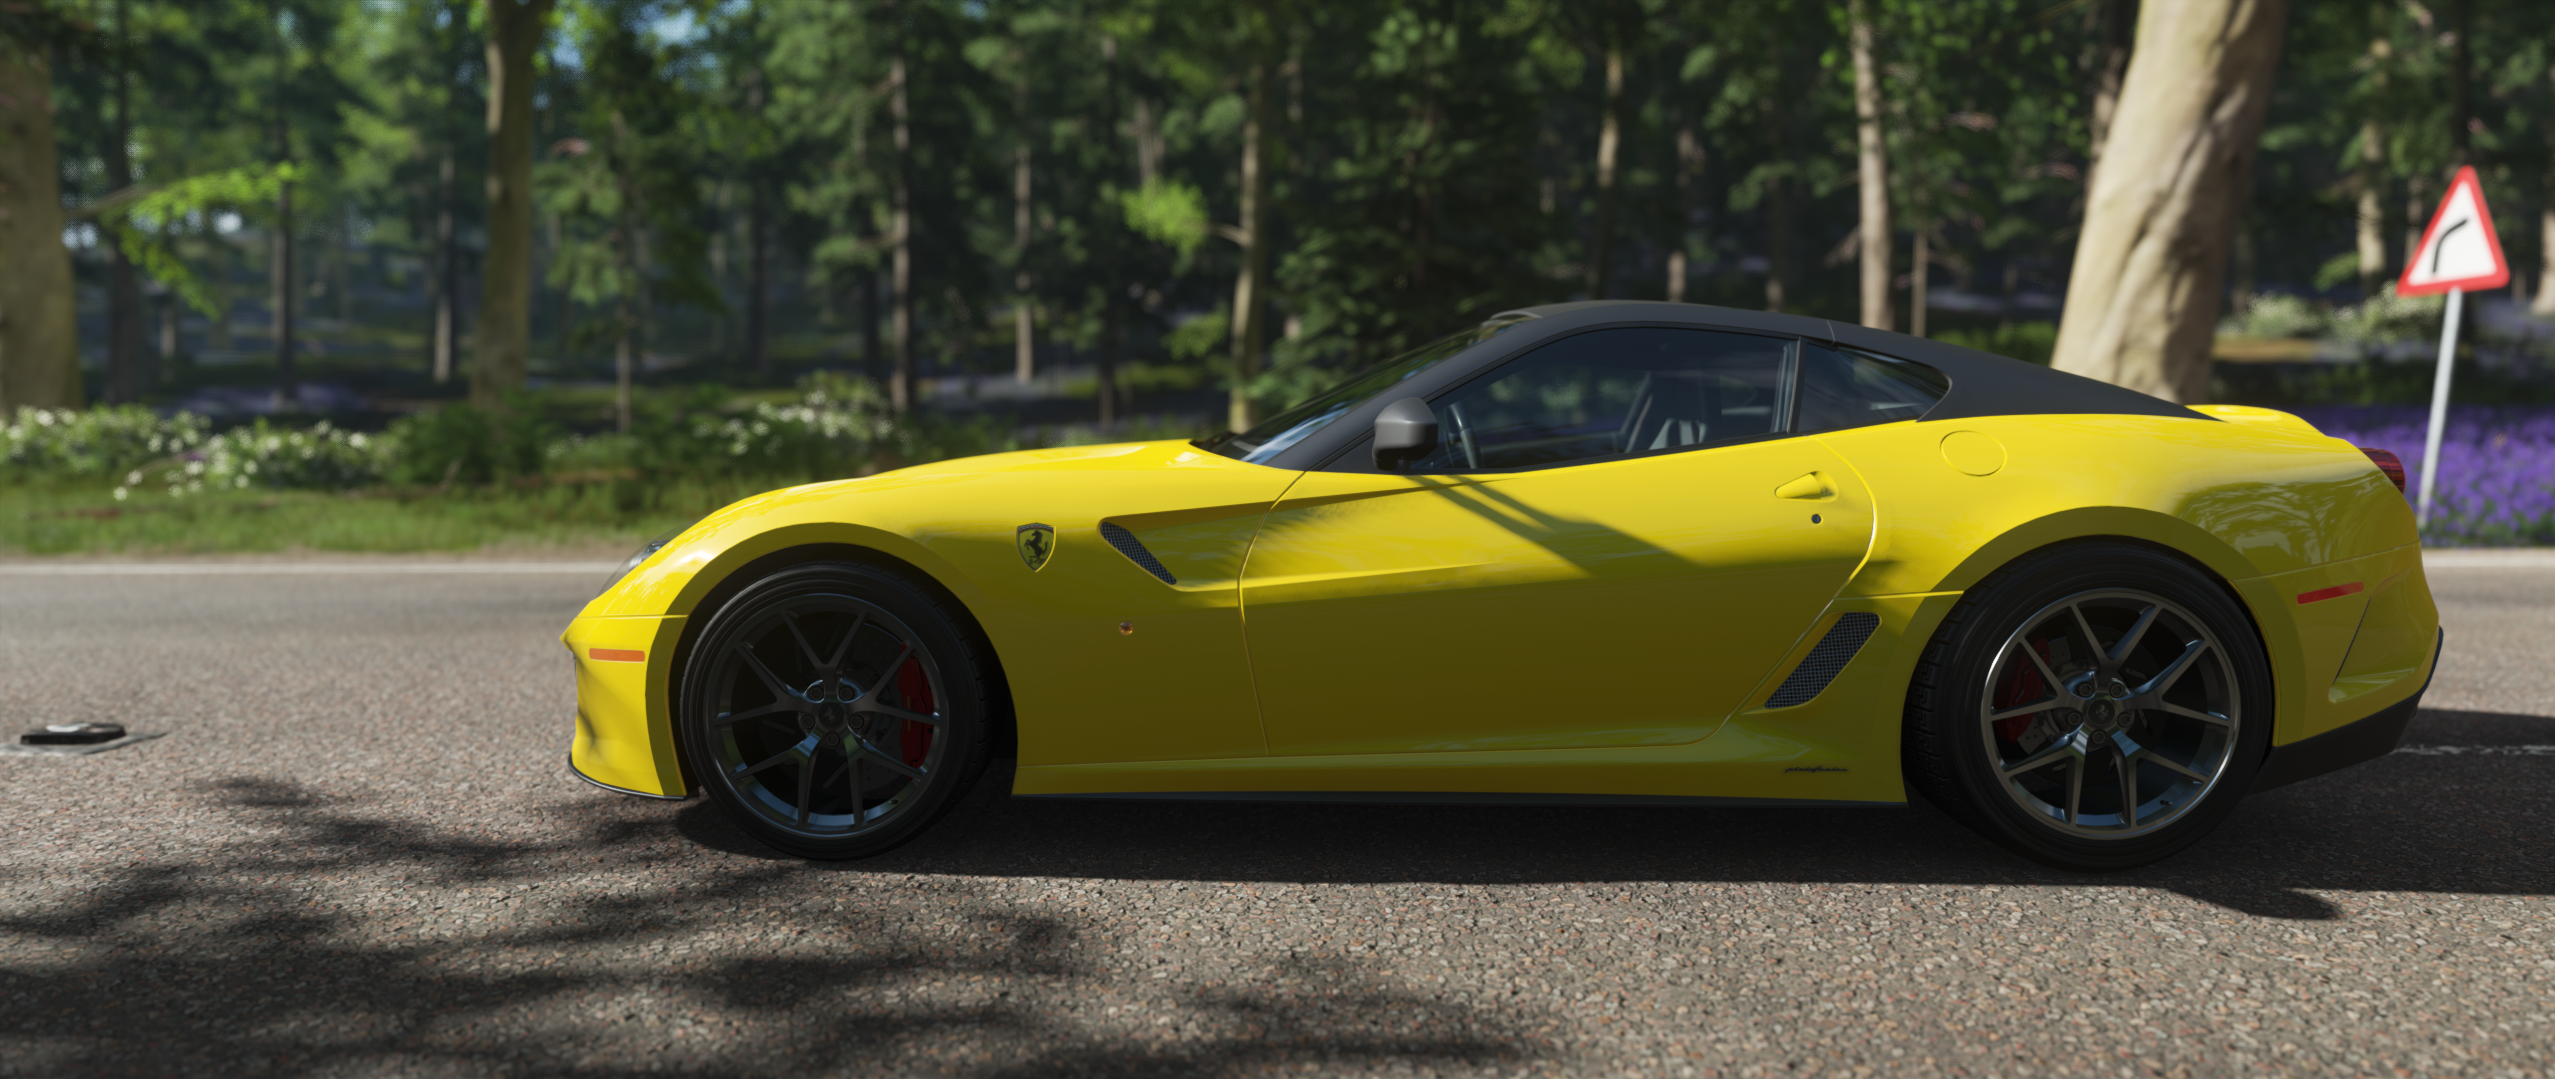 General 2555x1079 Forza Horizon 4 Ferrari Ferrari 599 video games yellow cars car vehicle screen shot